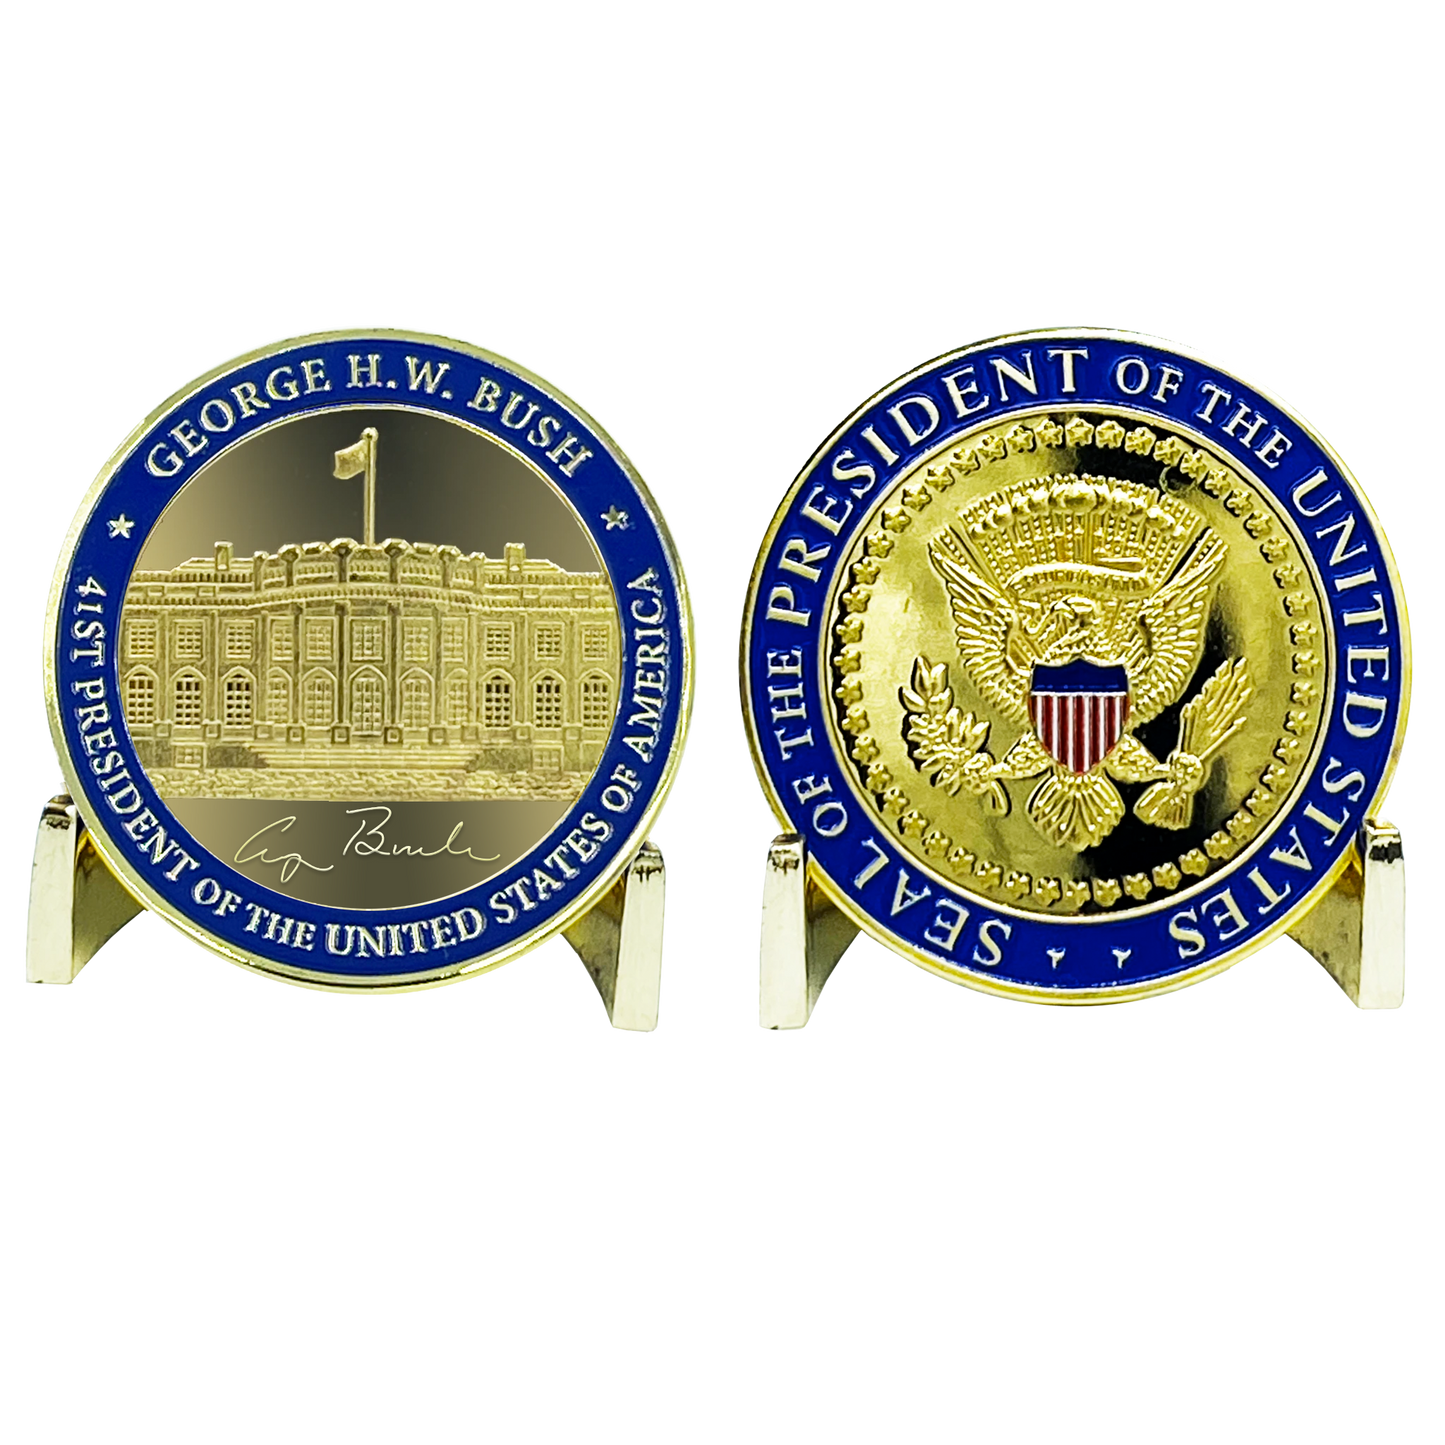 BL4-001 41st President George H.W. Bush Challenge Coin White House POTUS HW Bush coin